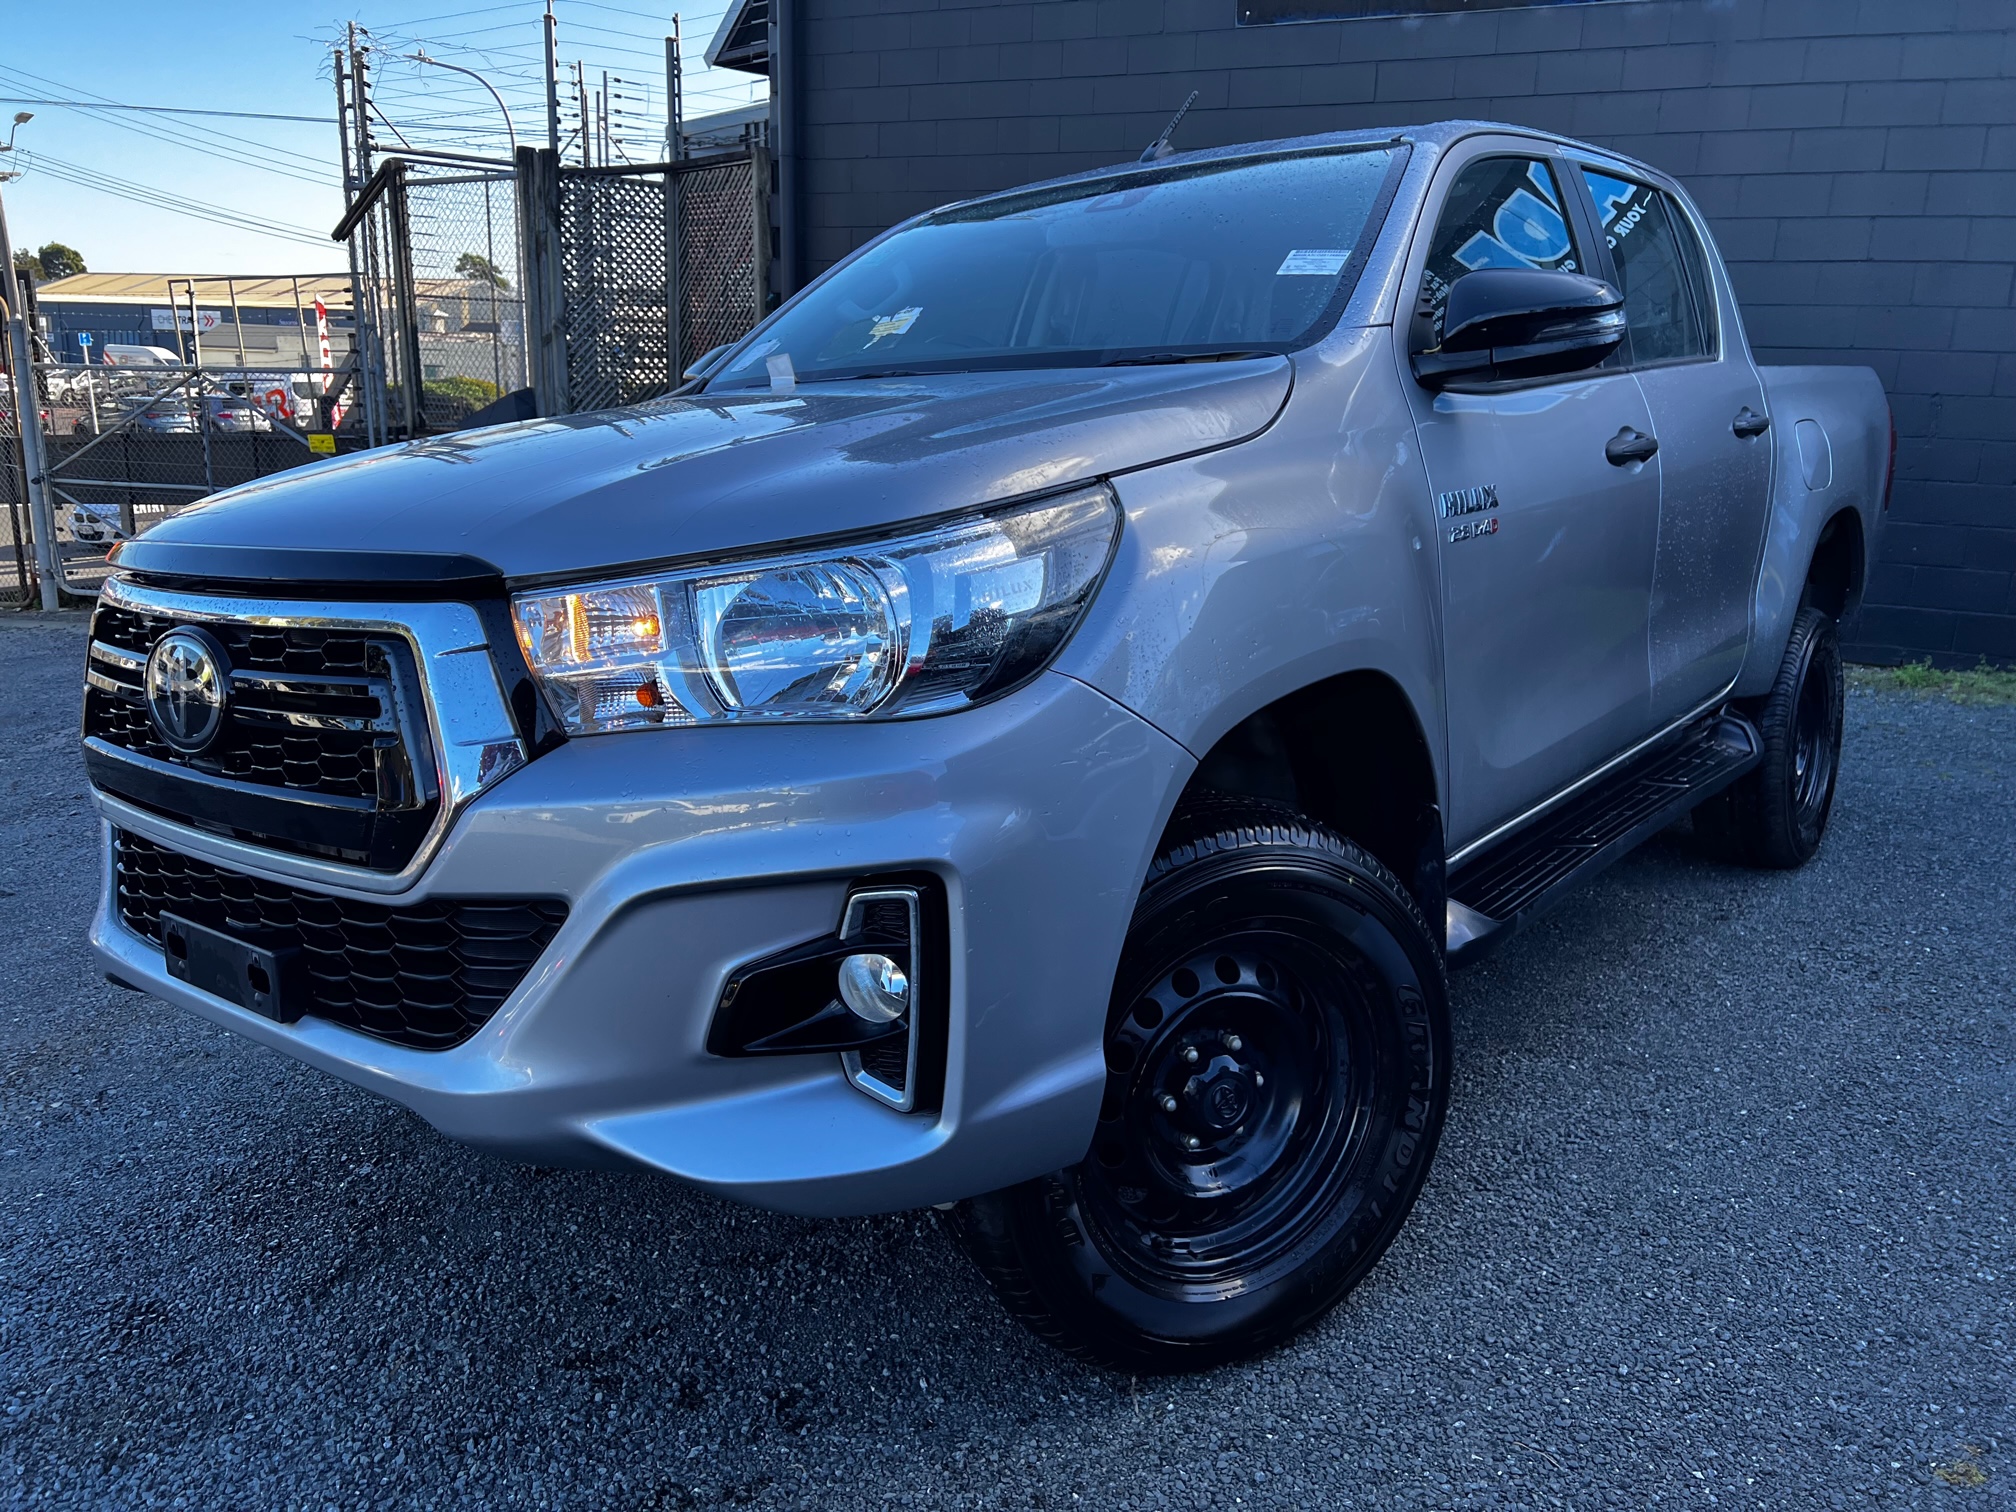 Toyota Hilux SR5 2019 Image 1